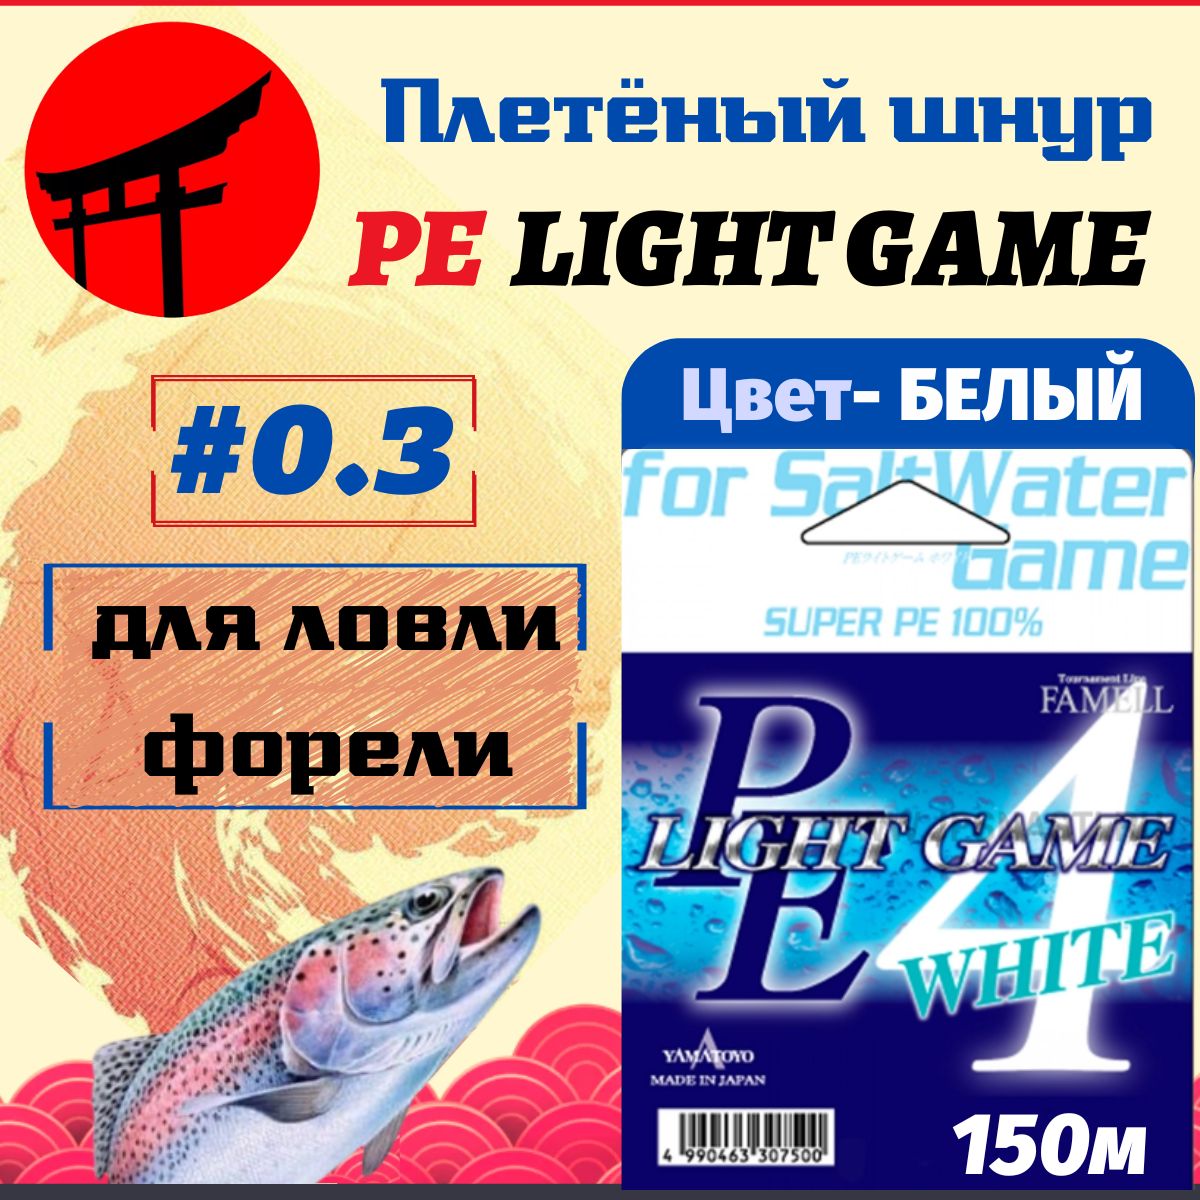 Yamatoyo light game. Плетеный шнур Yamatoyo pe Light game White. Yamatoyo pe Light game White. Yamatoyo.